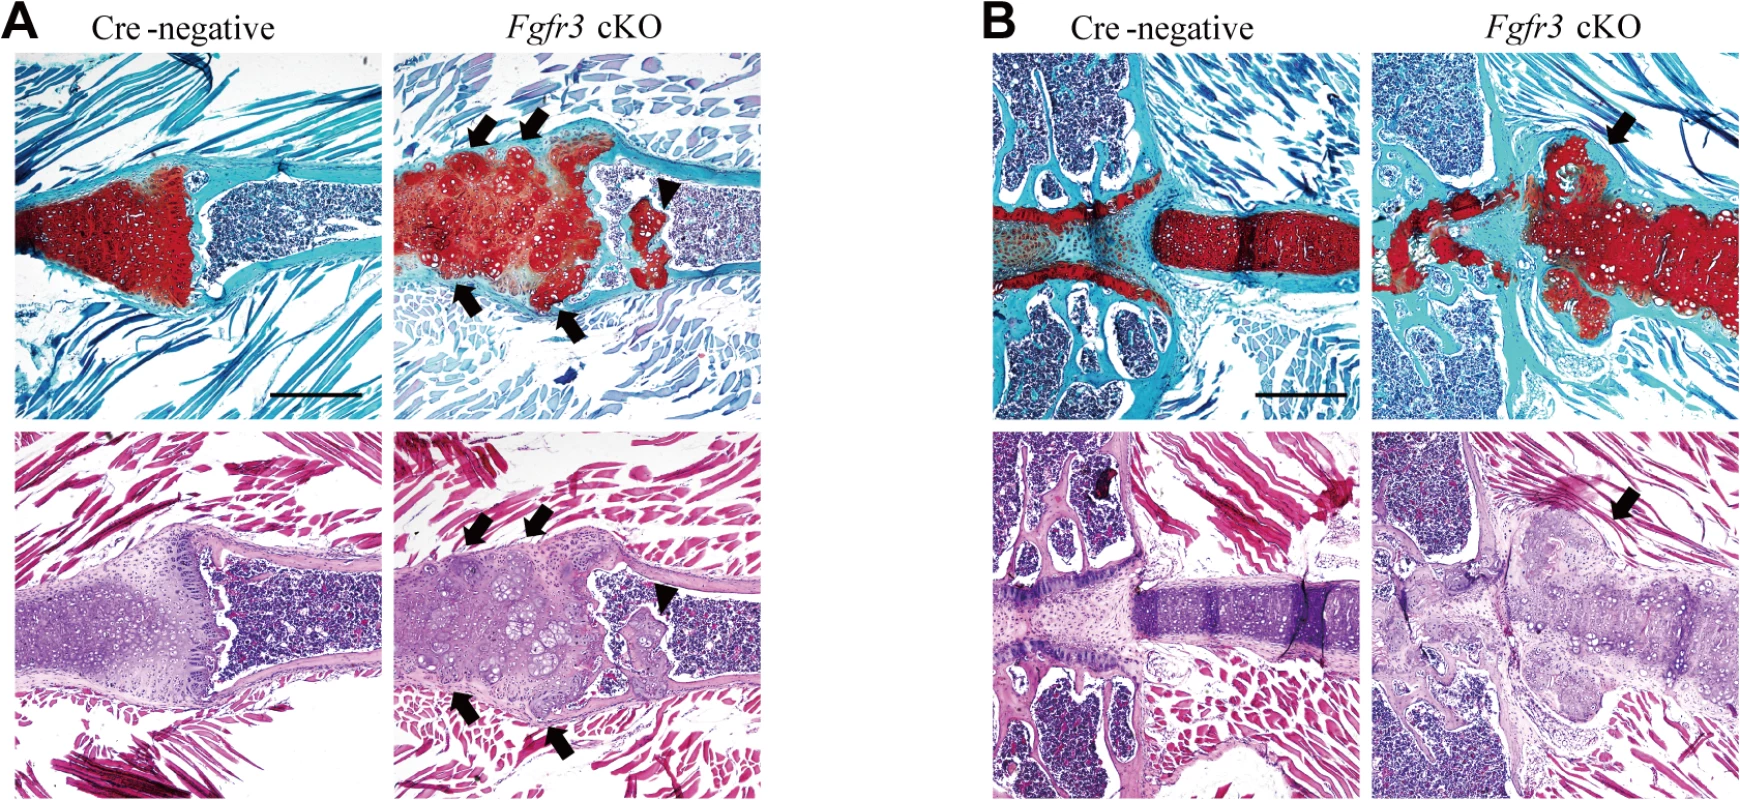 Histological assessment of the rib in <i>Fgfr3</i> cKO mice.